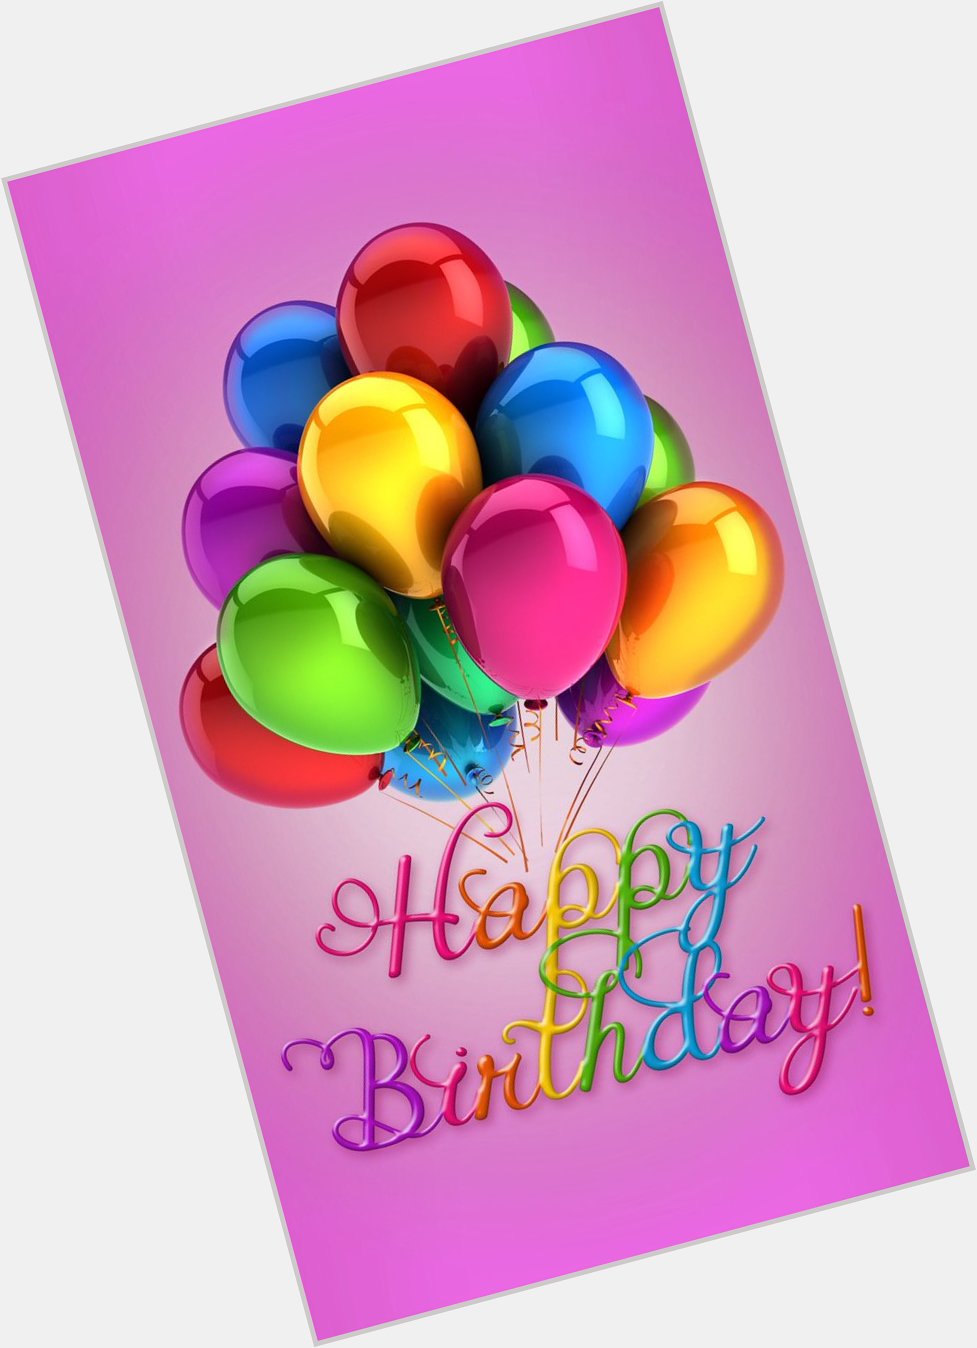  Happy Birthday Kelly Rowland!!! 